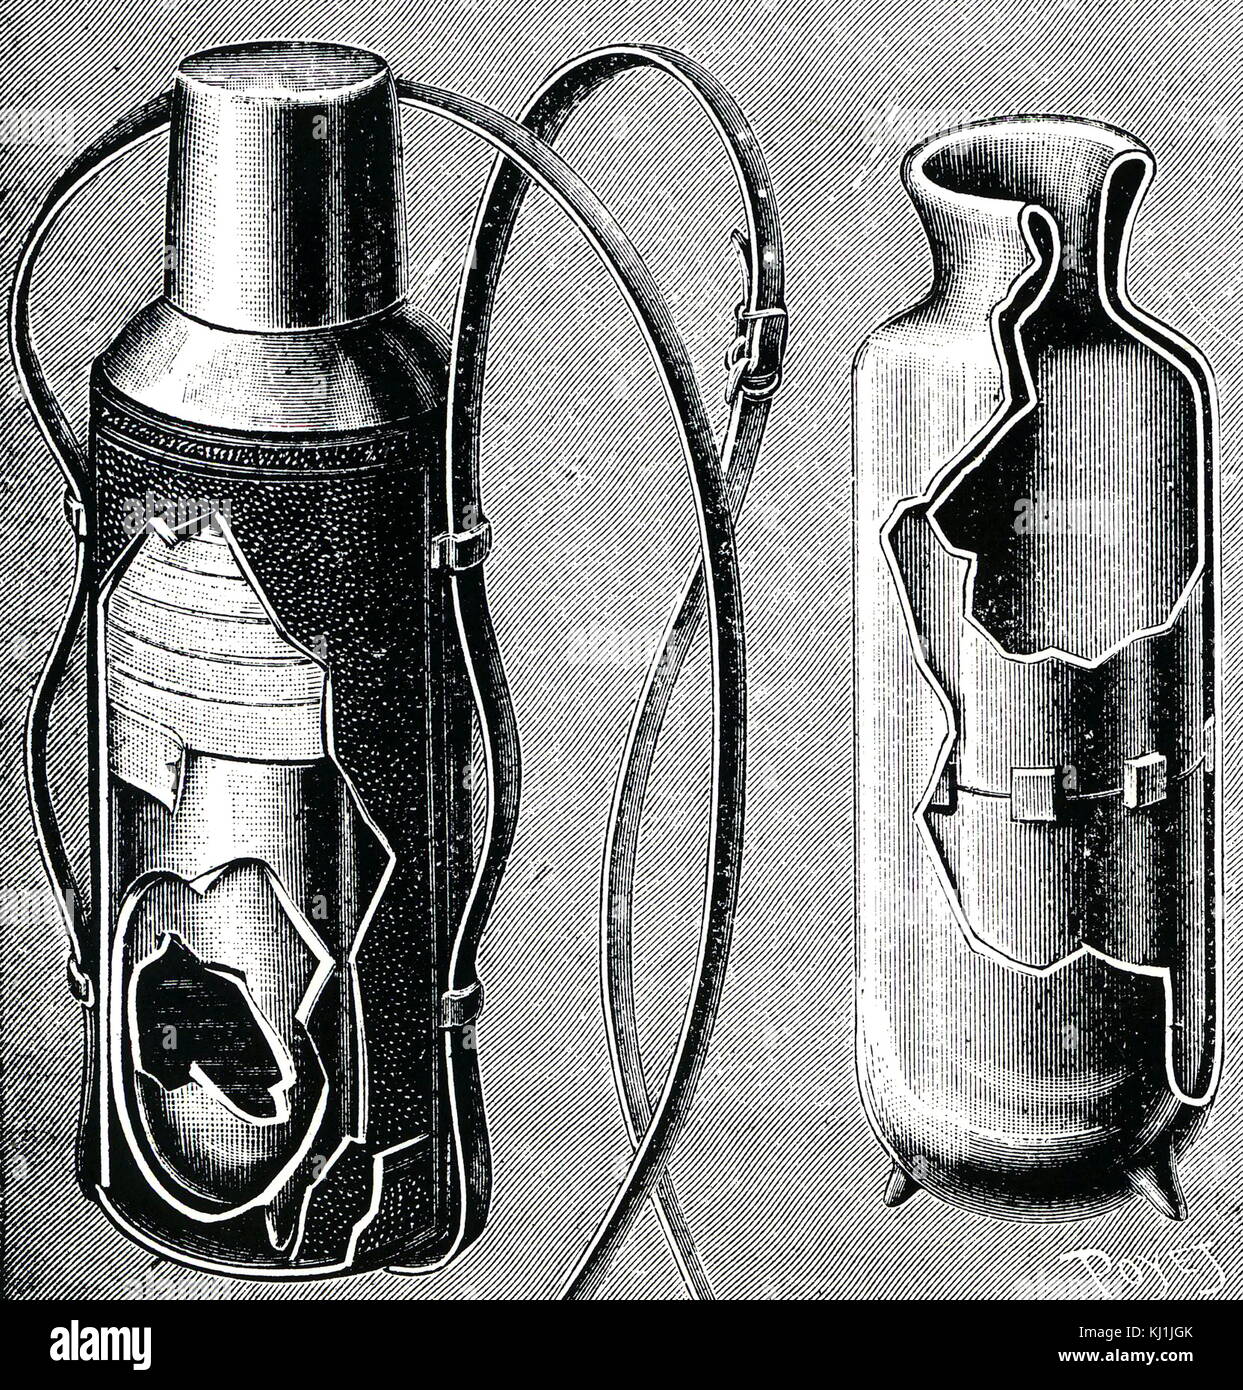 https://c8.alamy.com/comp/KJ1JGK/engraving-depicting-james-dewars-vacuum-flasks-sir-james-dewar-1842-KJ1JGK.jpg